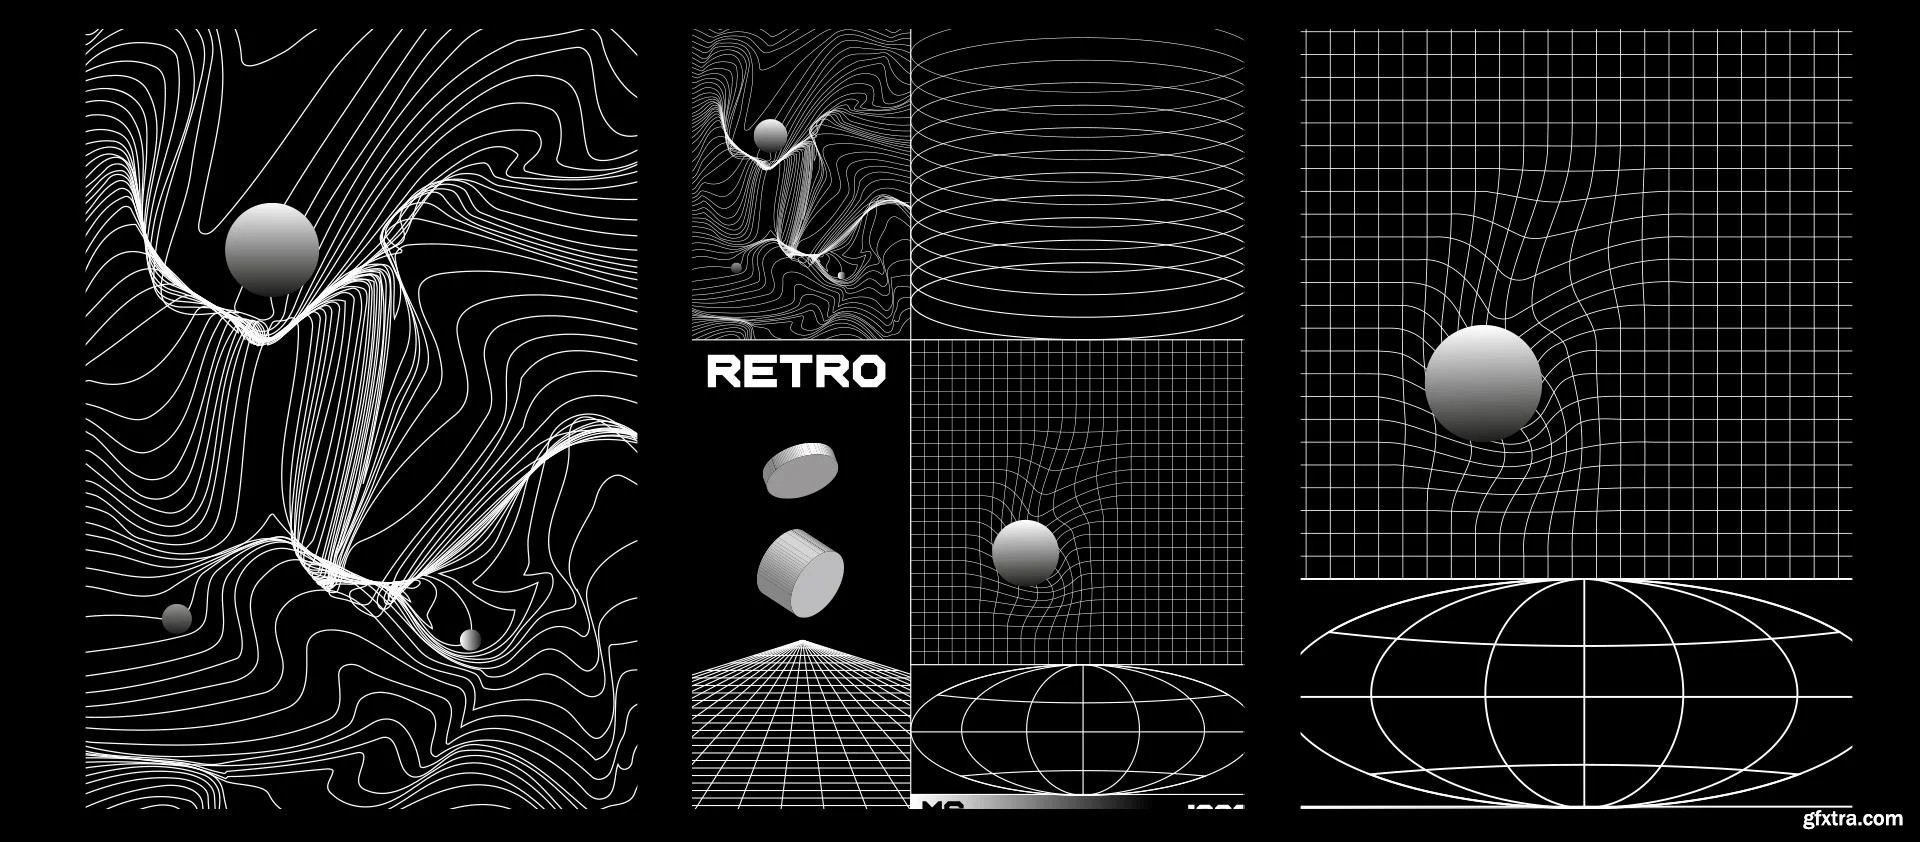 Retro Graphics Poster Design #001 » GFxtra